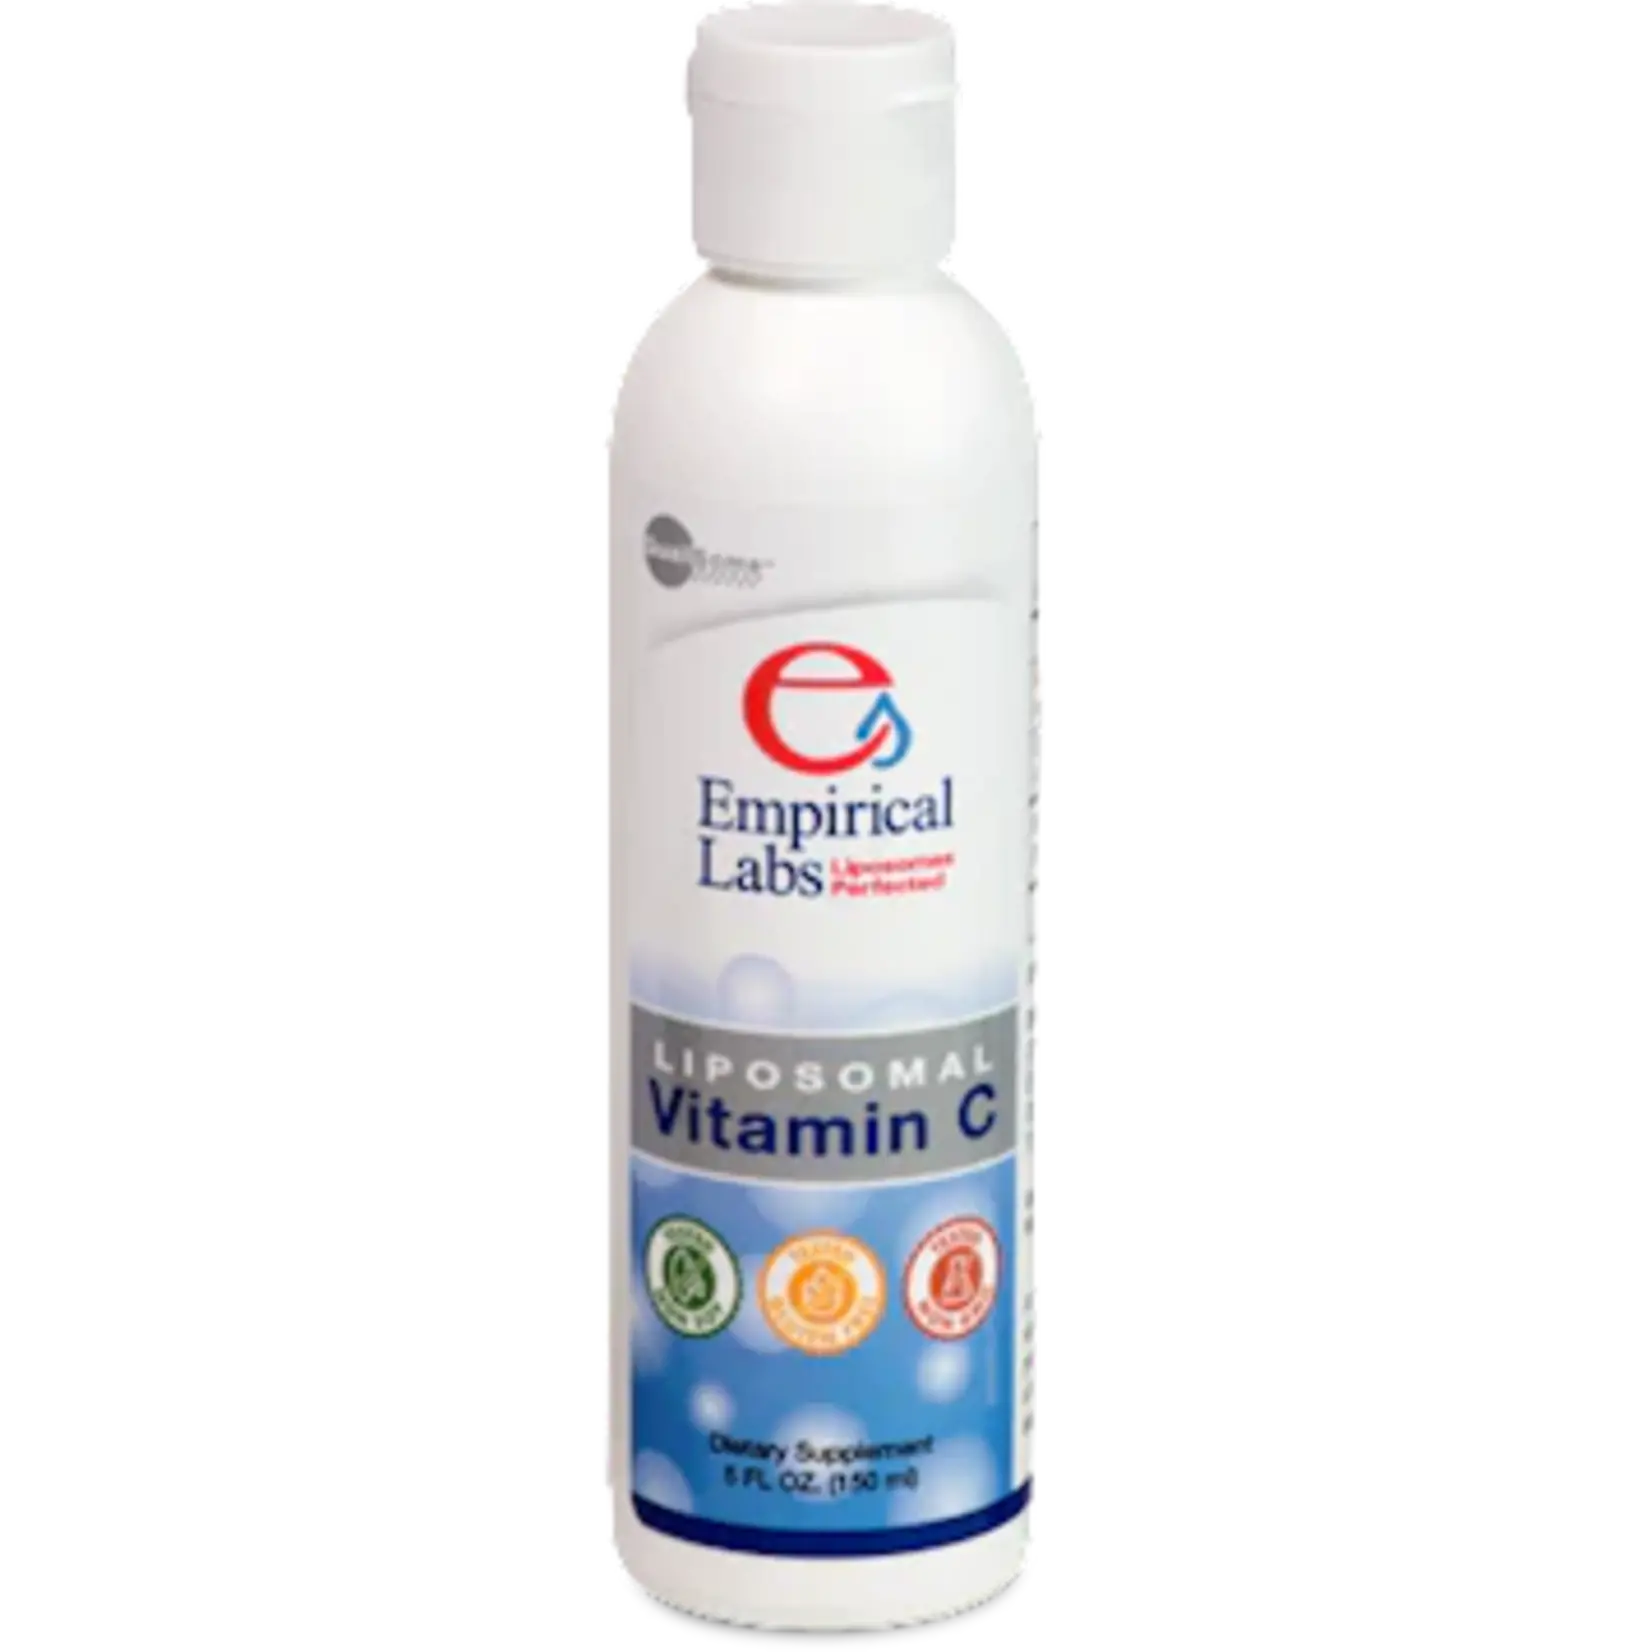 Liposomal Vitamin C - 5 fl oz (Empirical Labs)